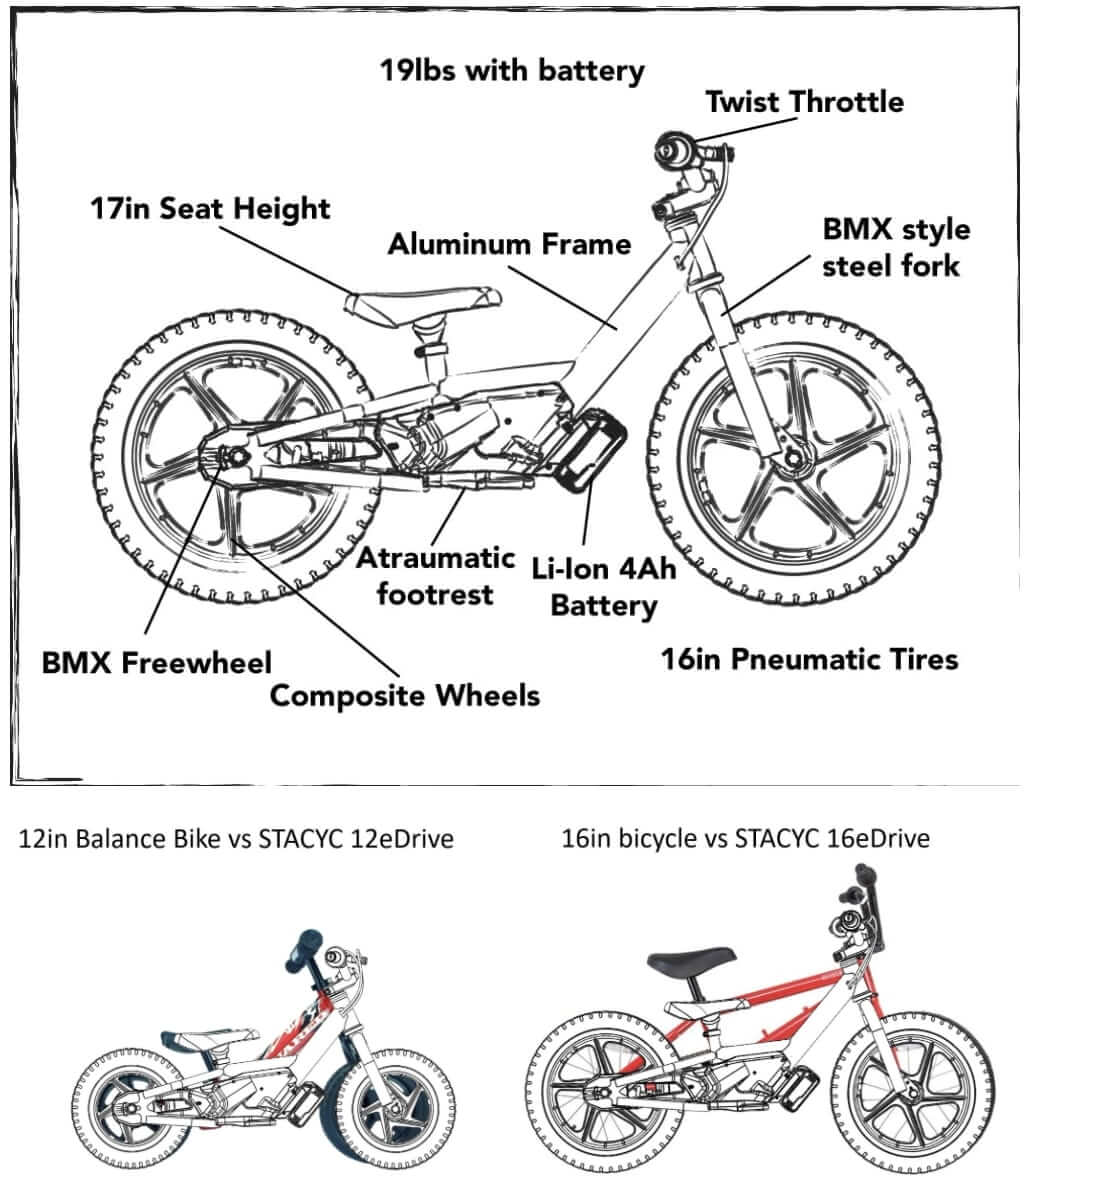 Stacyc bikes comparison